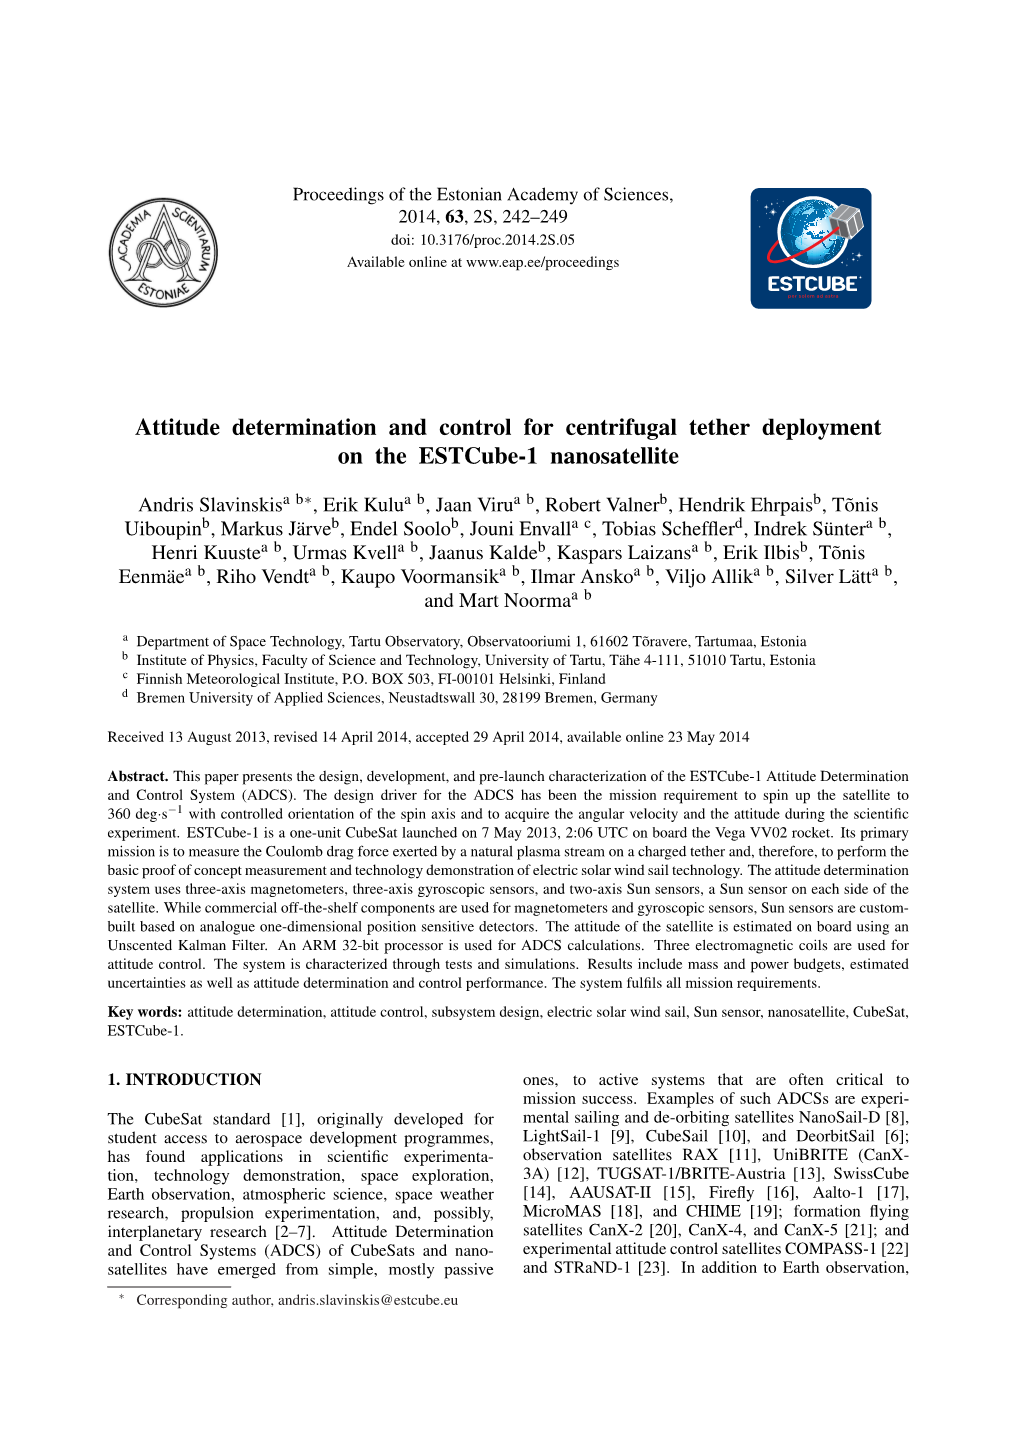 Attitude Determination and Control for Centrifugal Tether Deployment on the Estcube-1 Nanosatellite